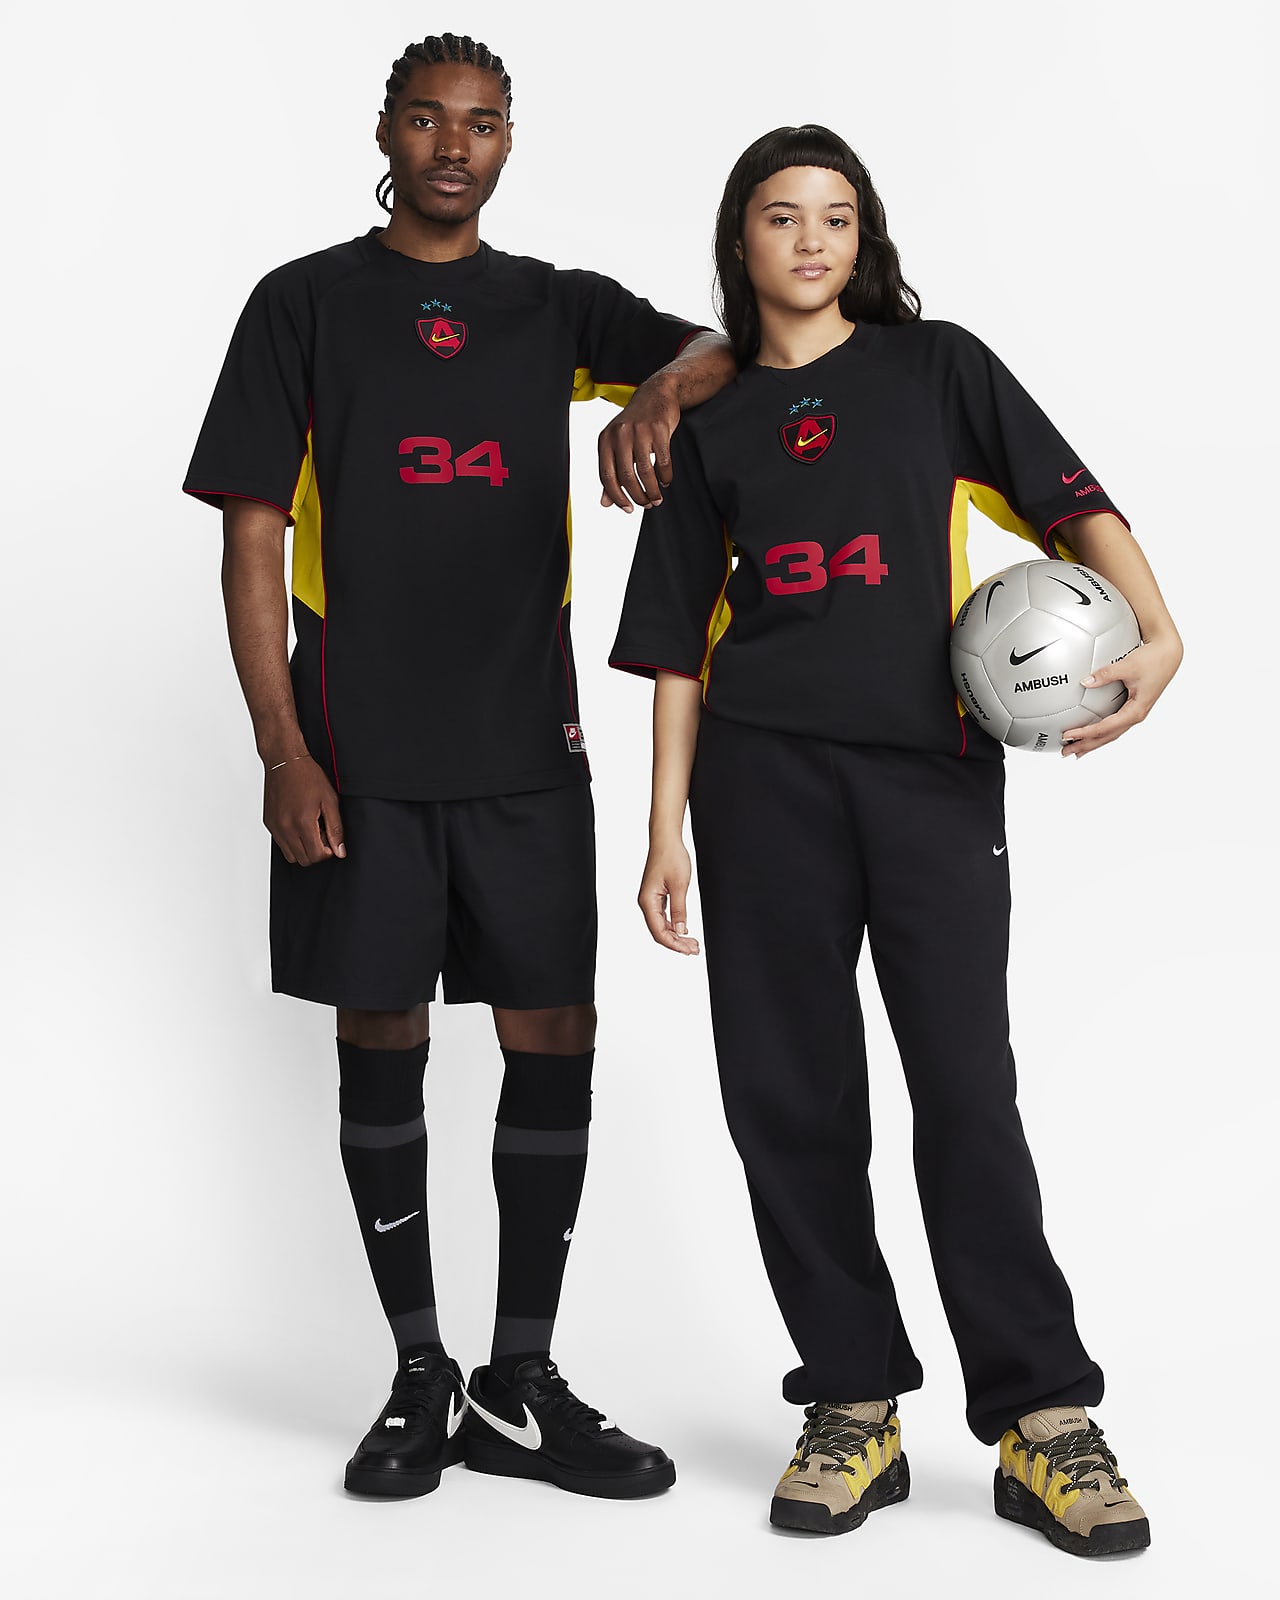 Nike x AMBUSH Soccer Ball